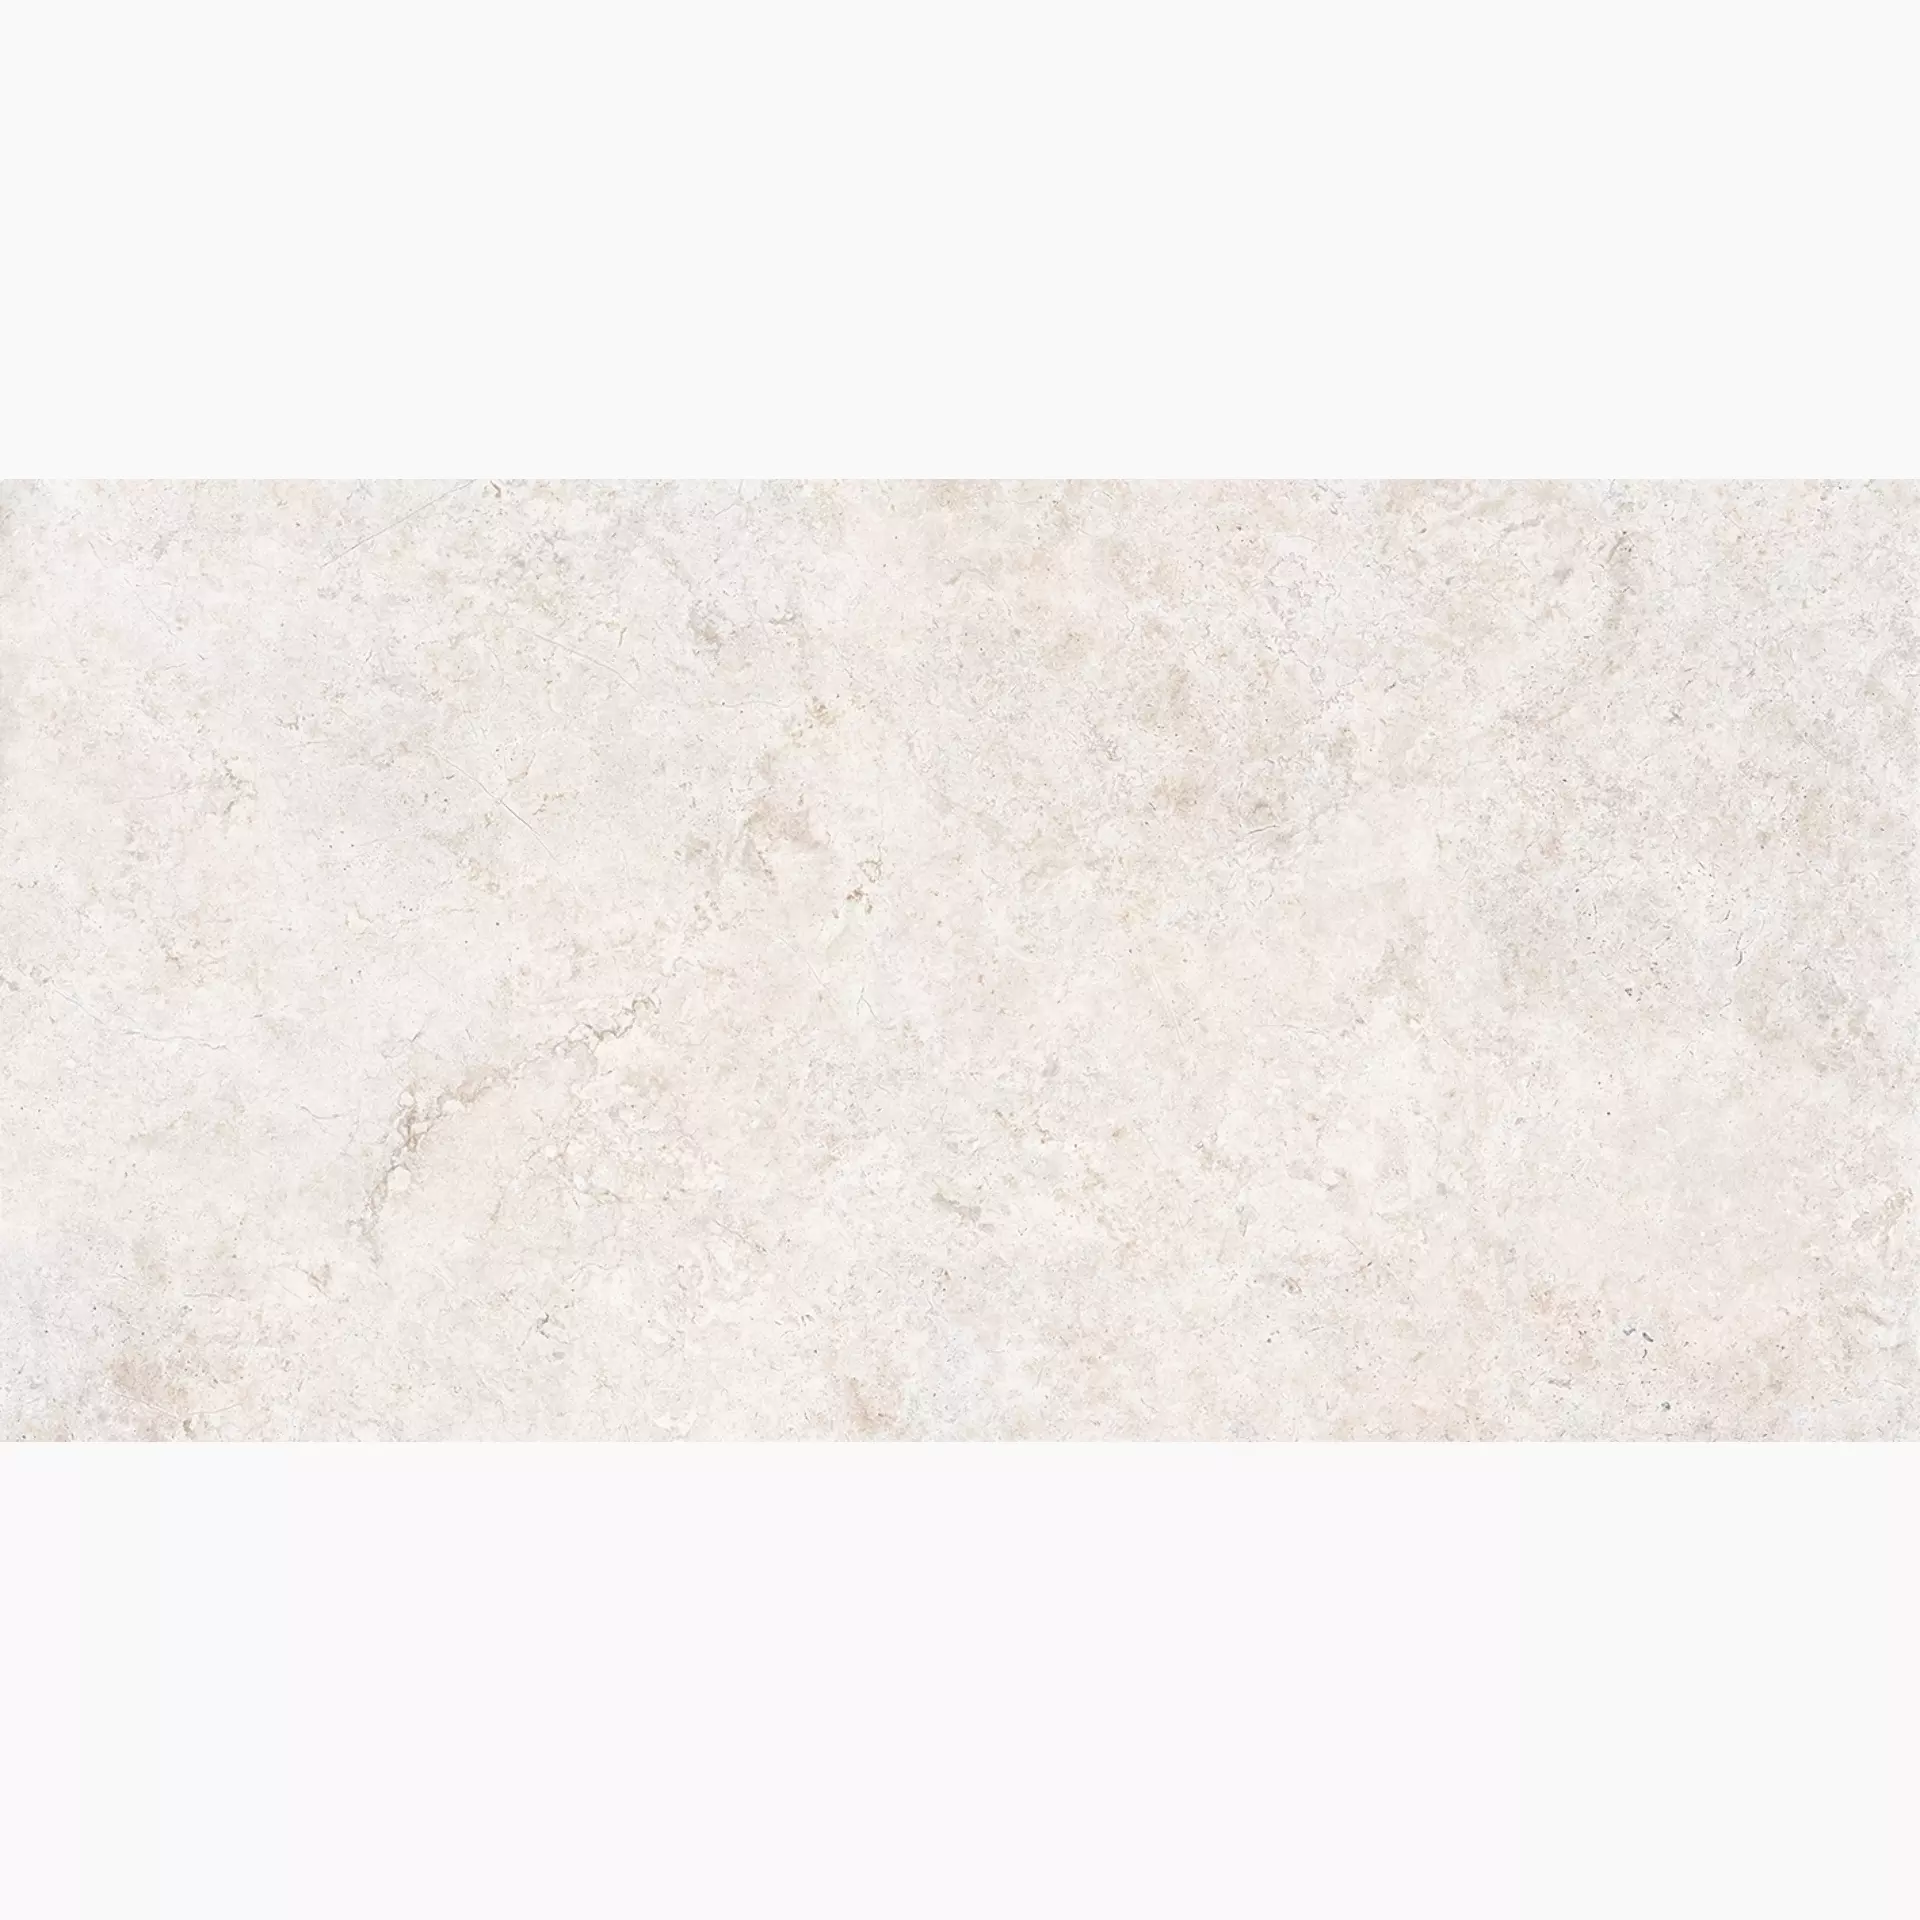 Sichenia Amboise Bianco Soft Grip 0192781 60x120cm rectified 10mm